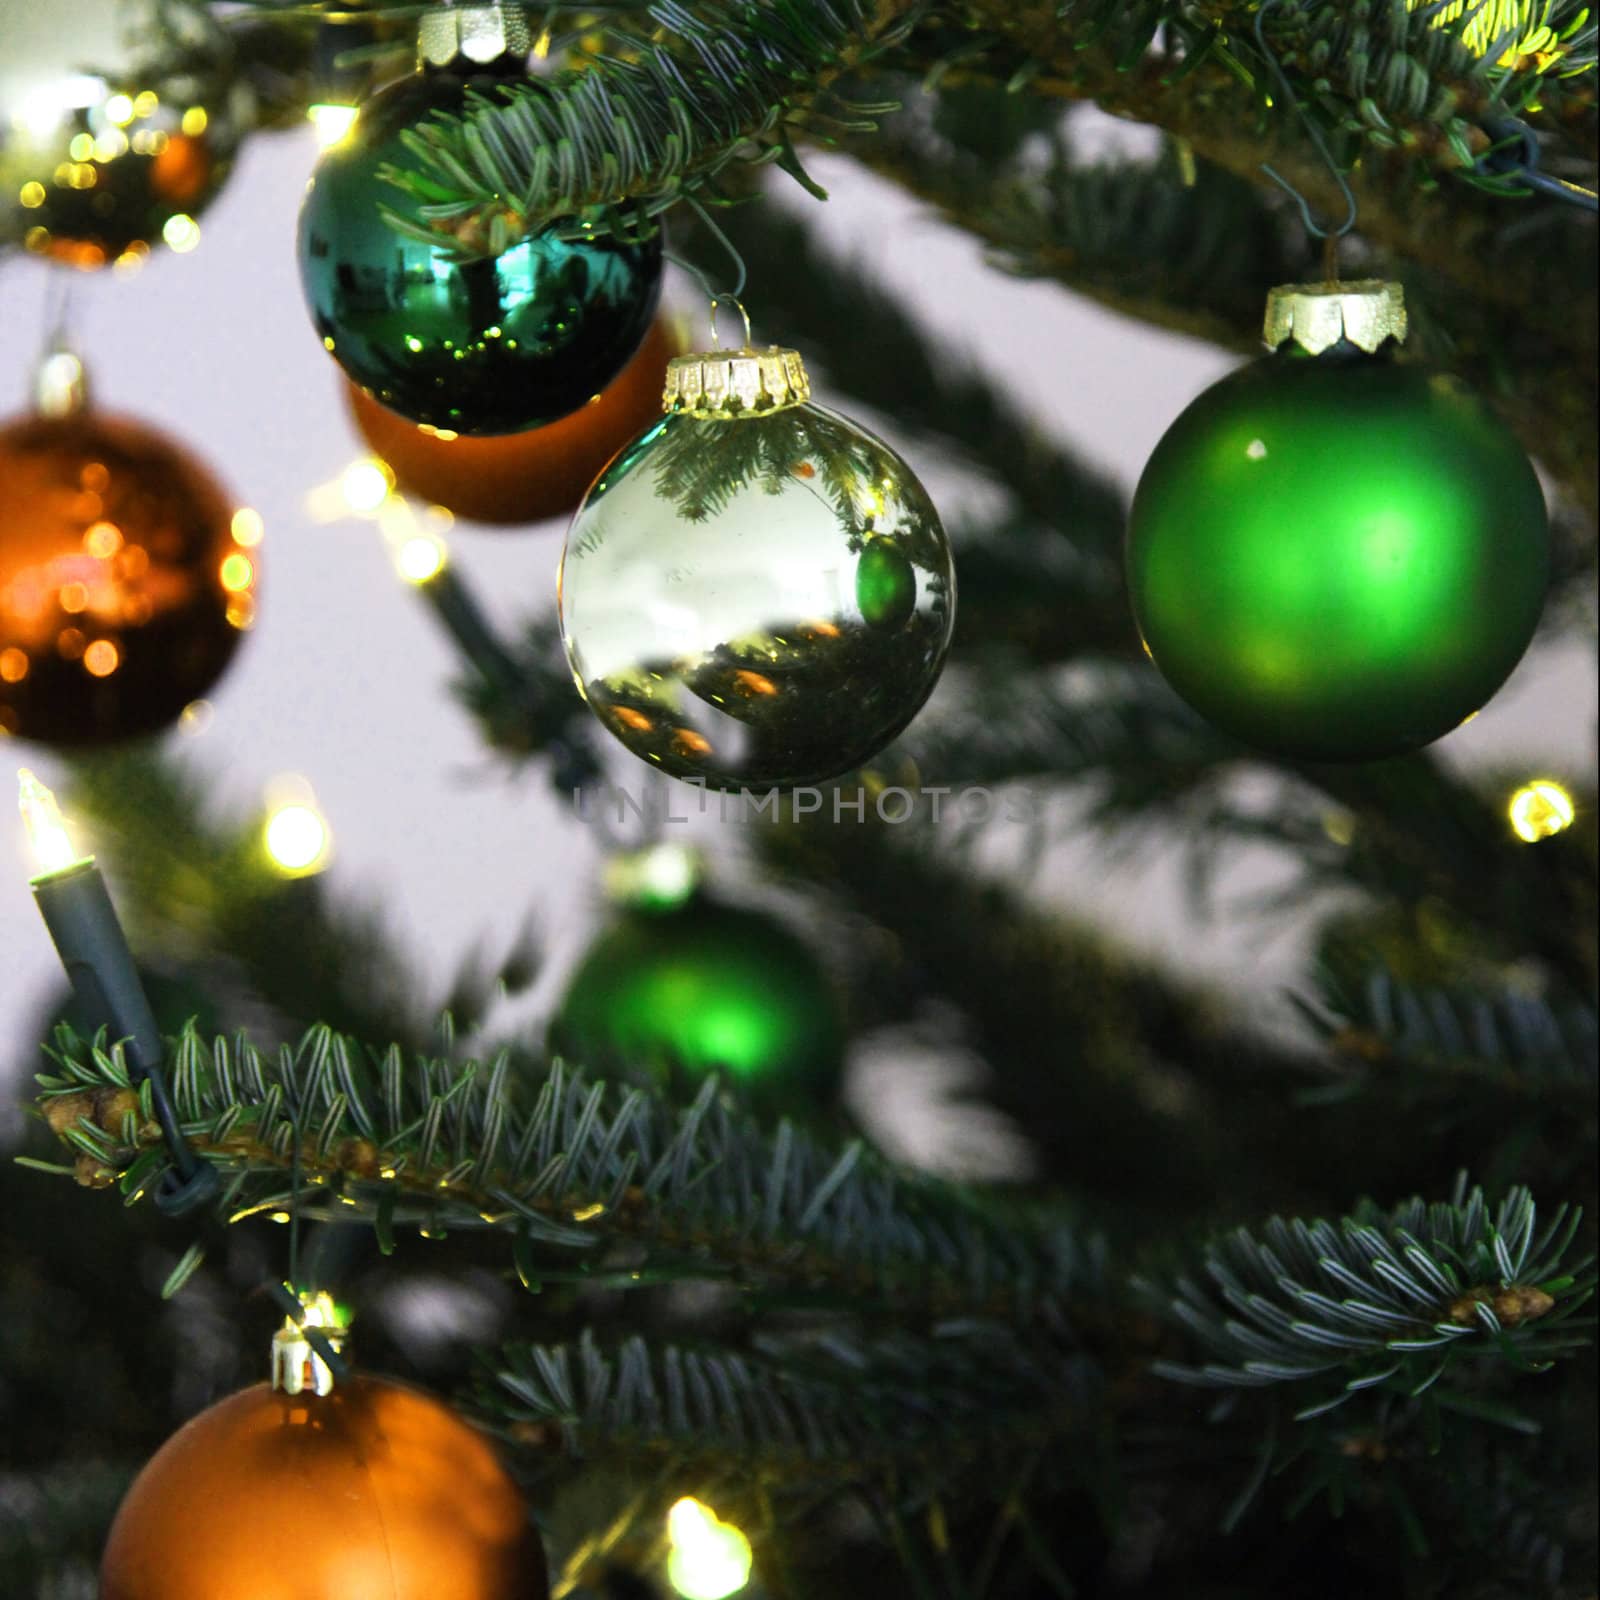 Christmas tree with shiny green globes by Farina6000